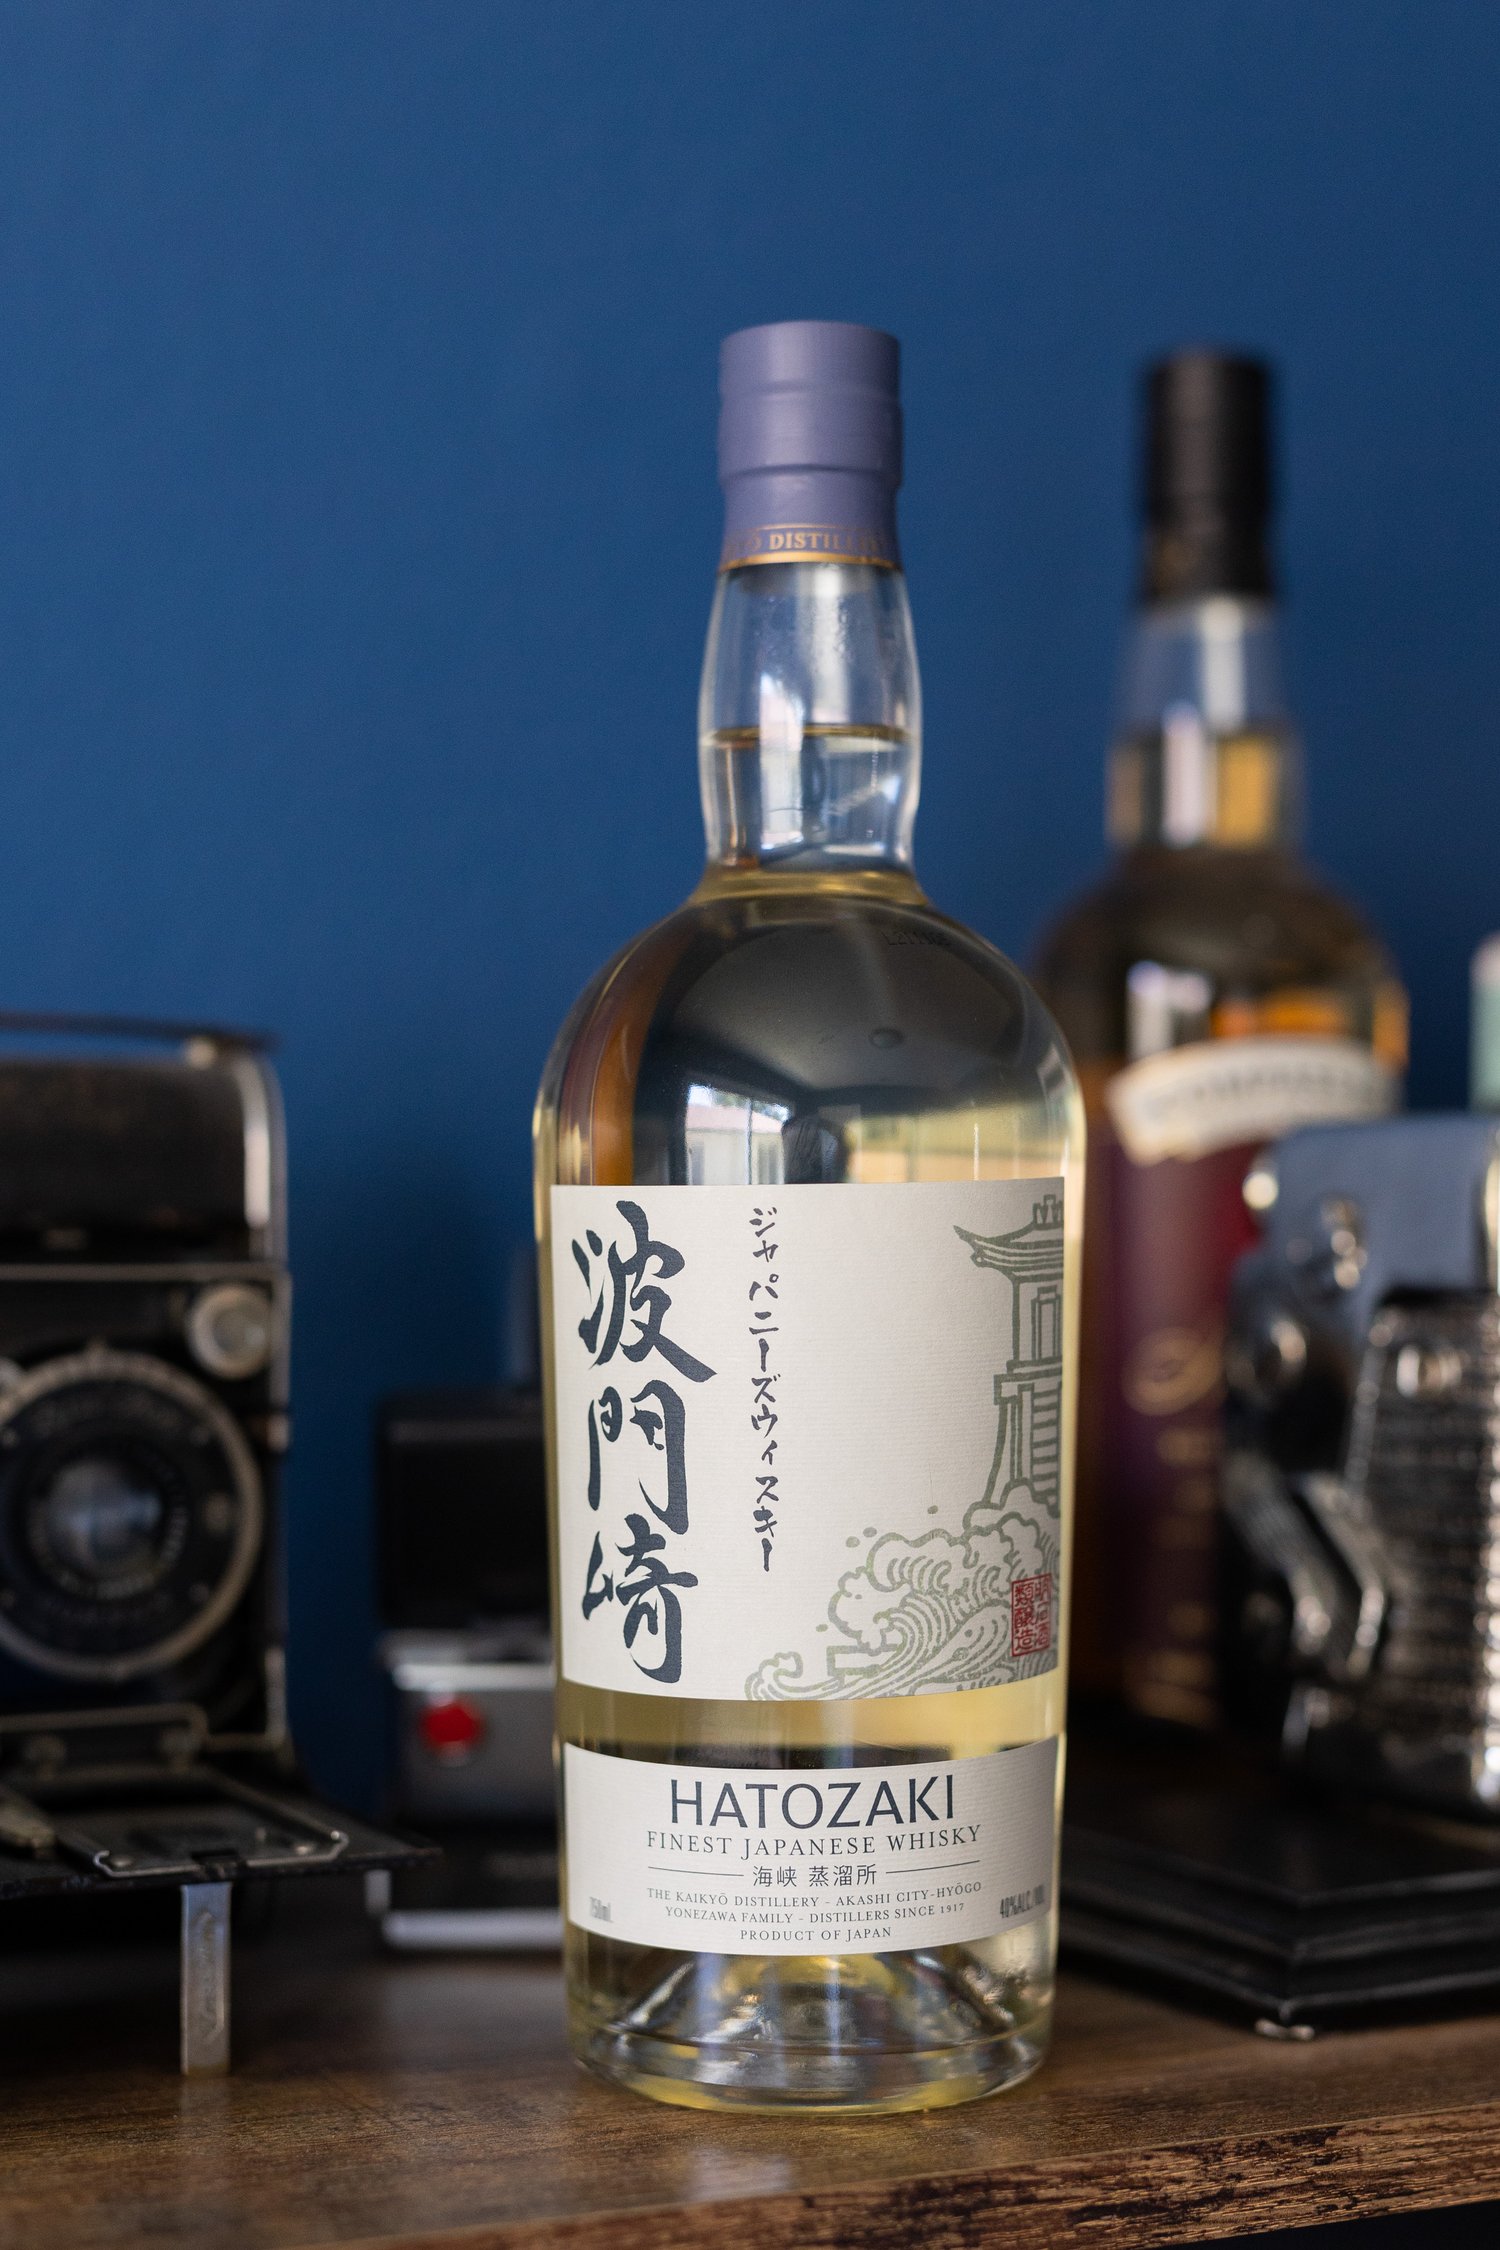 Review — Whisky Japanese Finest Hatozaki Whisky Study The